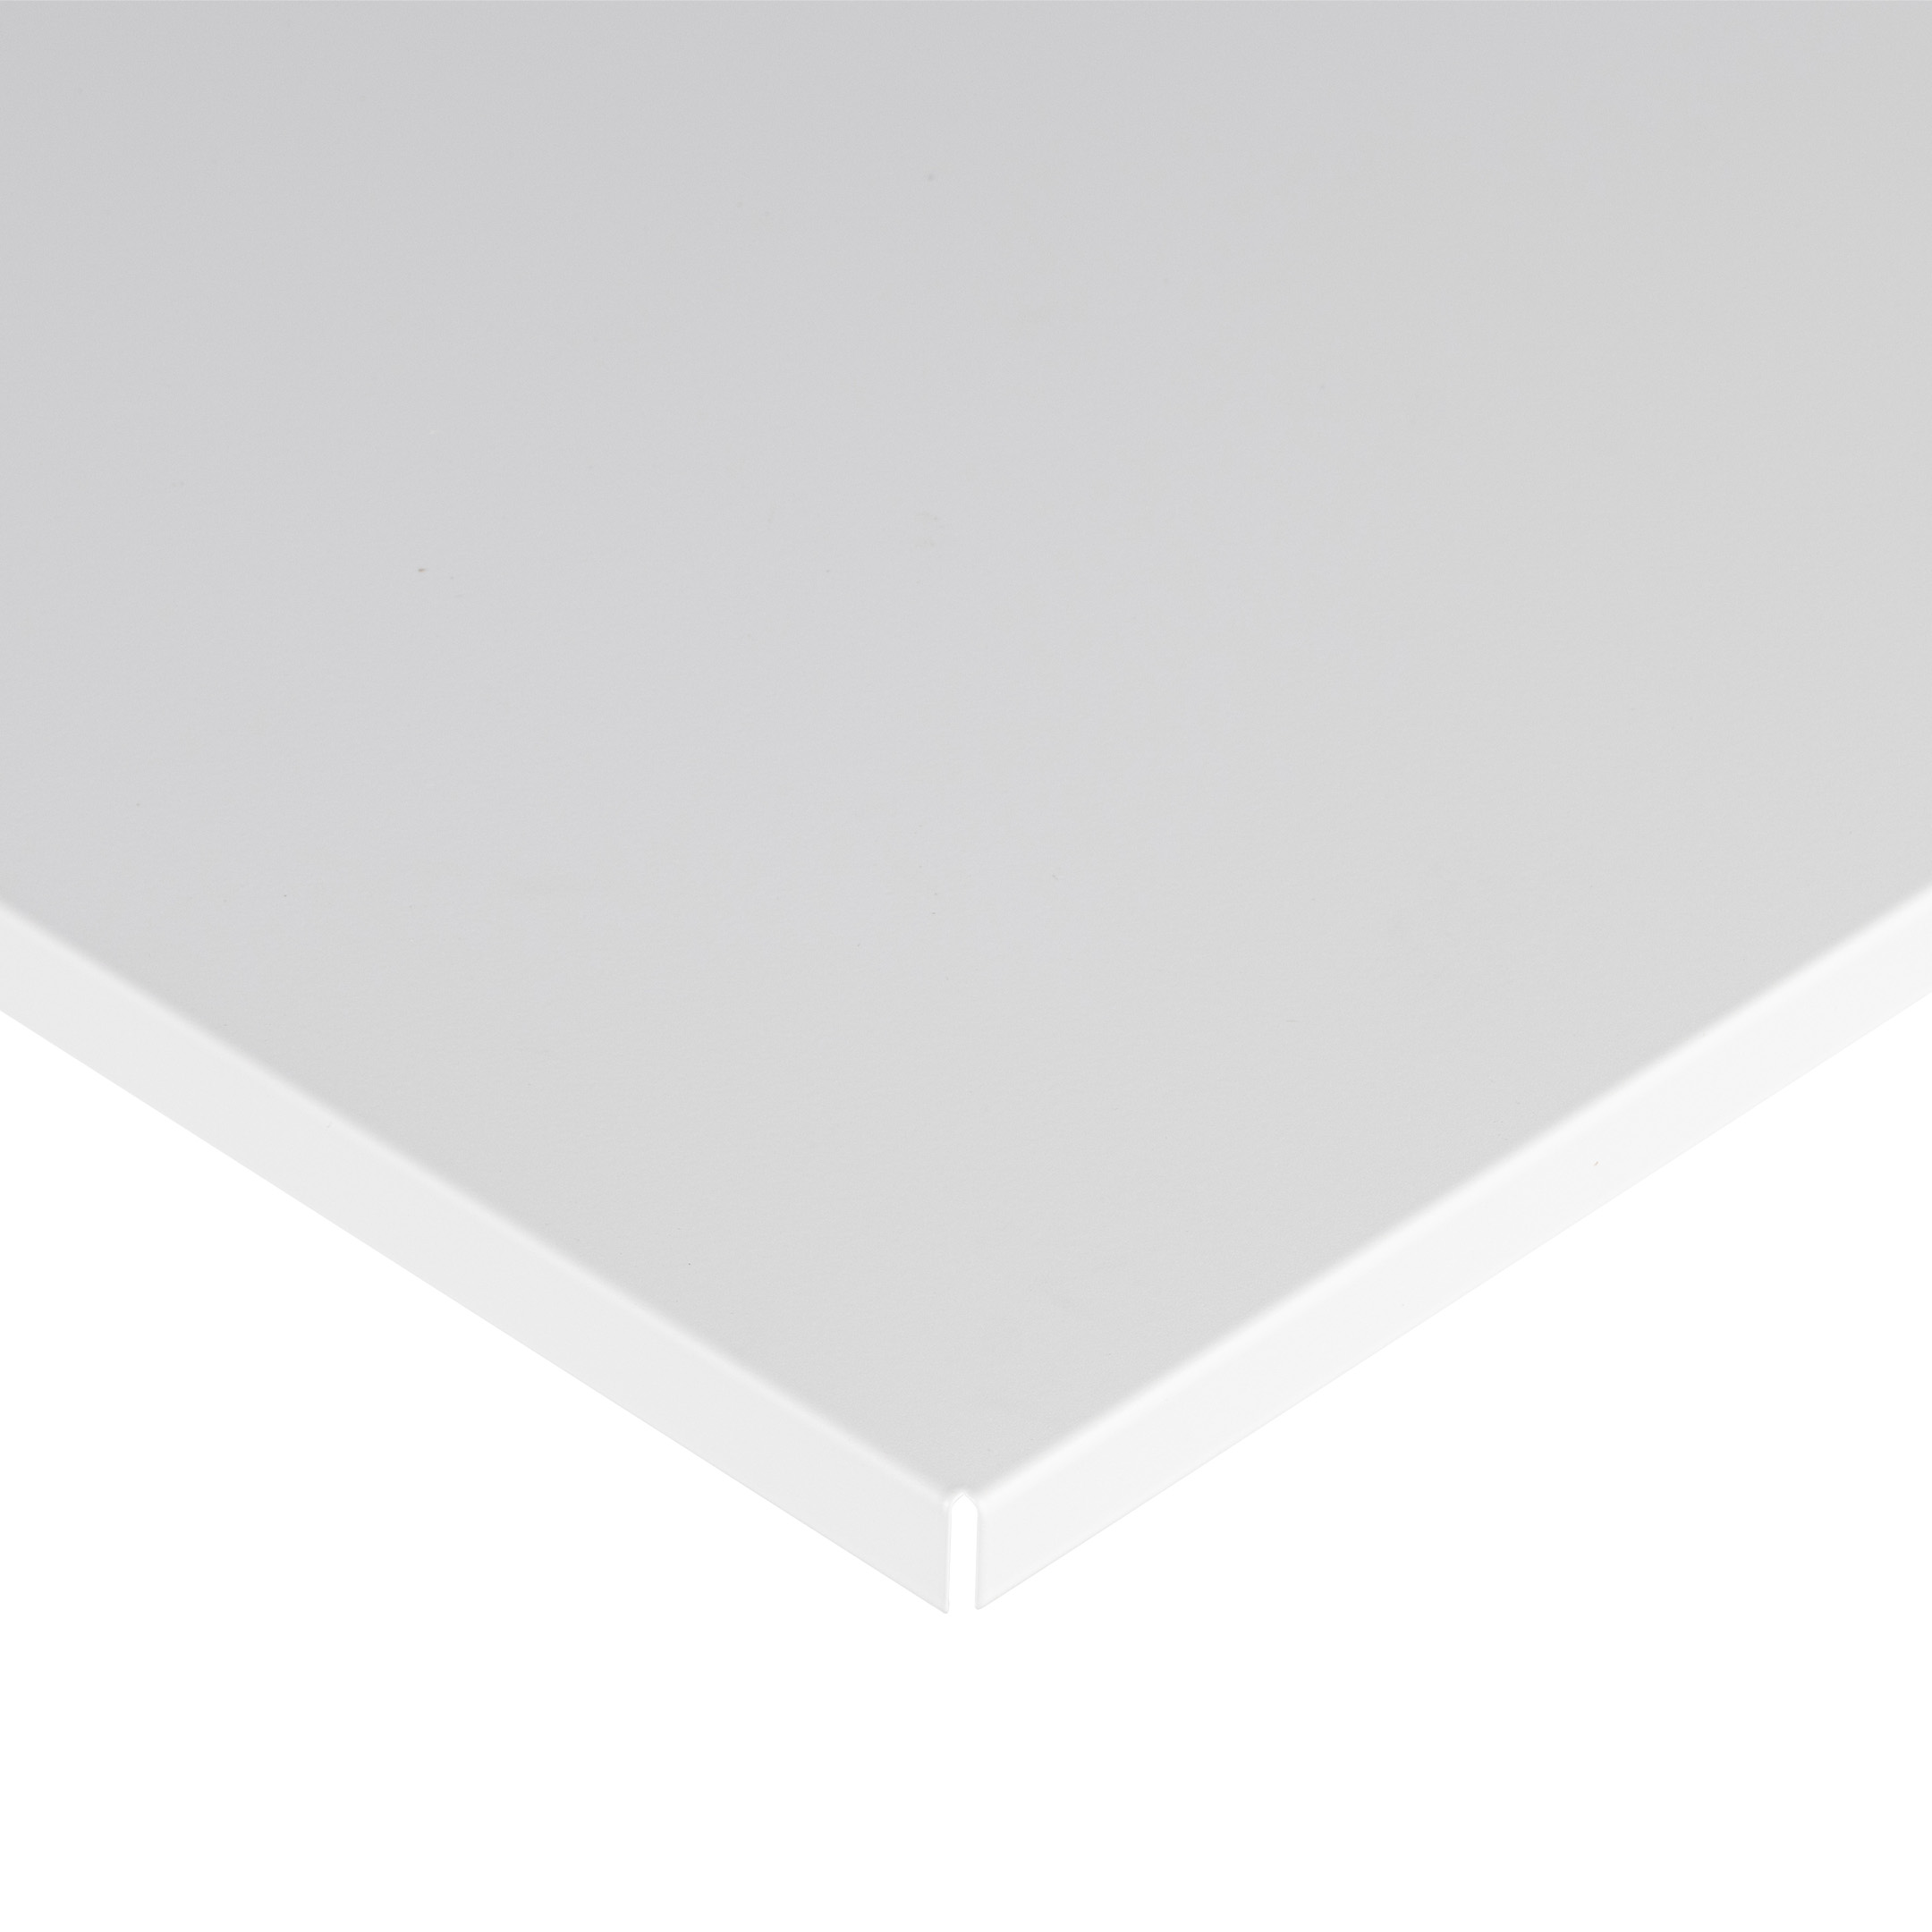 фото Плита к подвесному потолку 600x600x15 мм lay-in plain board 18 штук armstrong